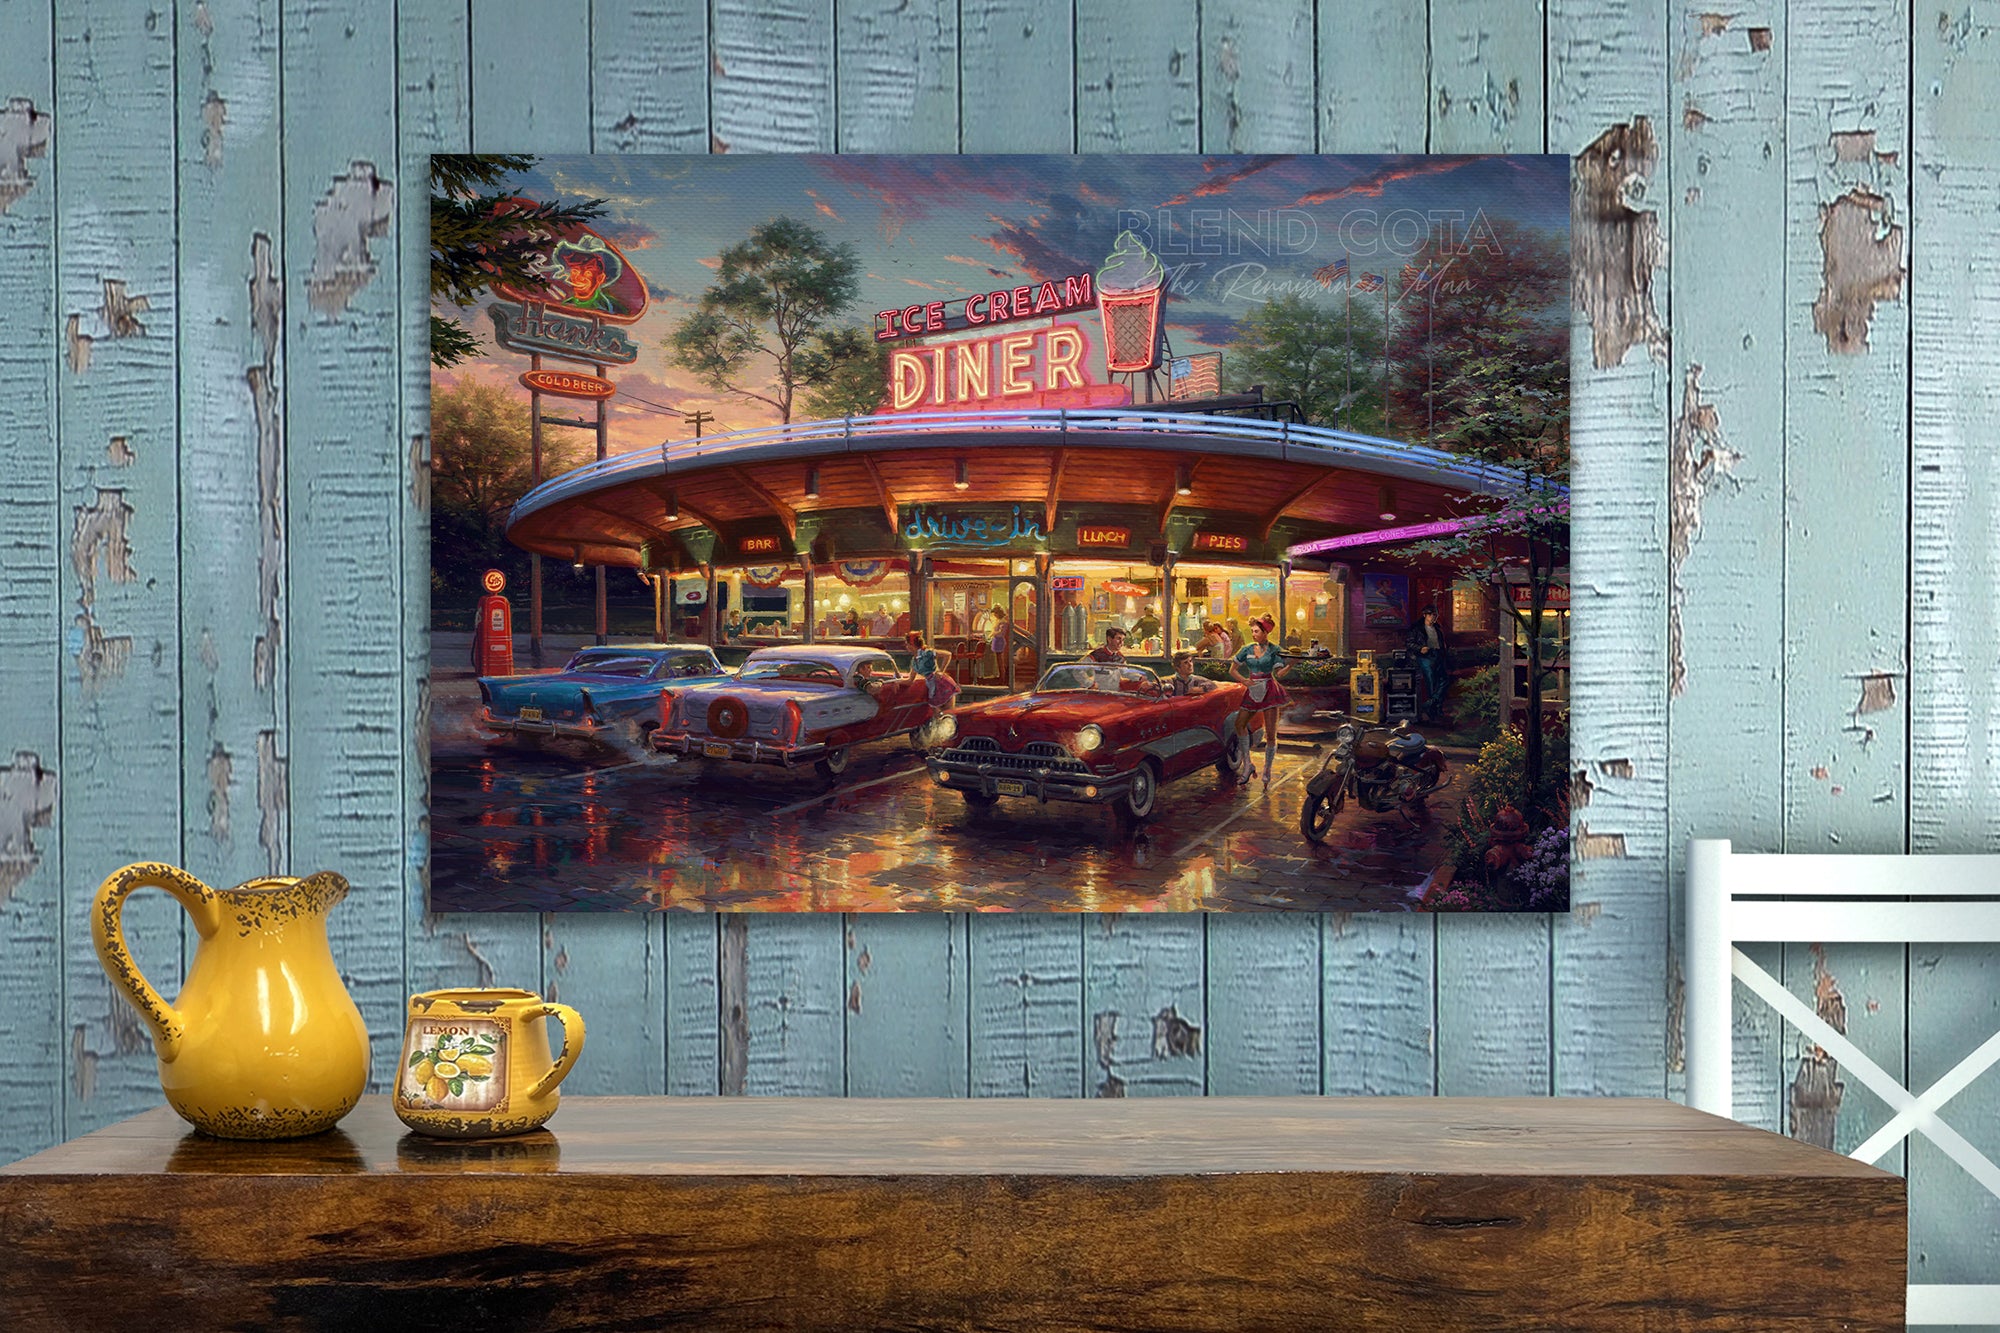 Meet You At The Diner - Blend Cota Original Oil Painting Framed on Canvas - Blend Cota Studios